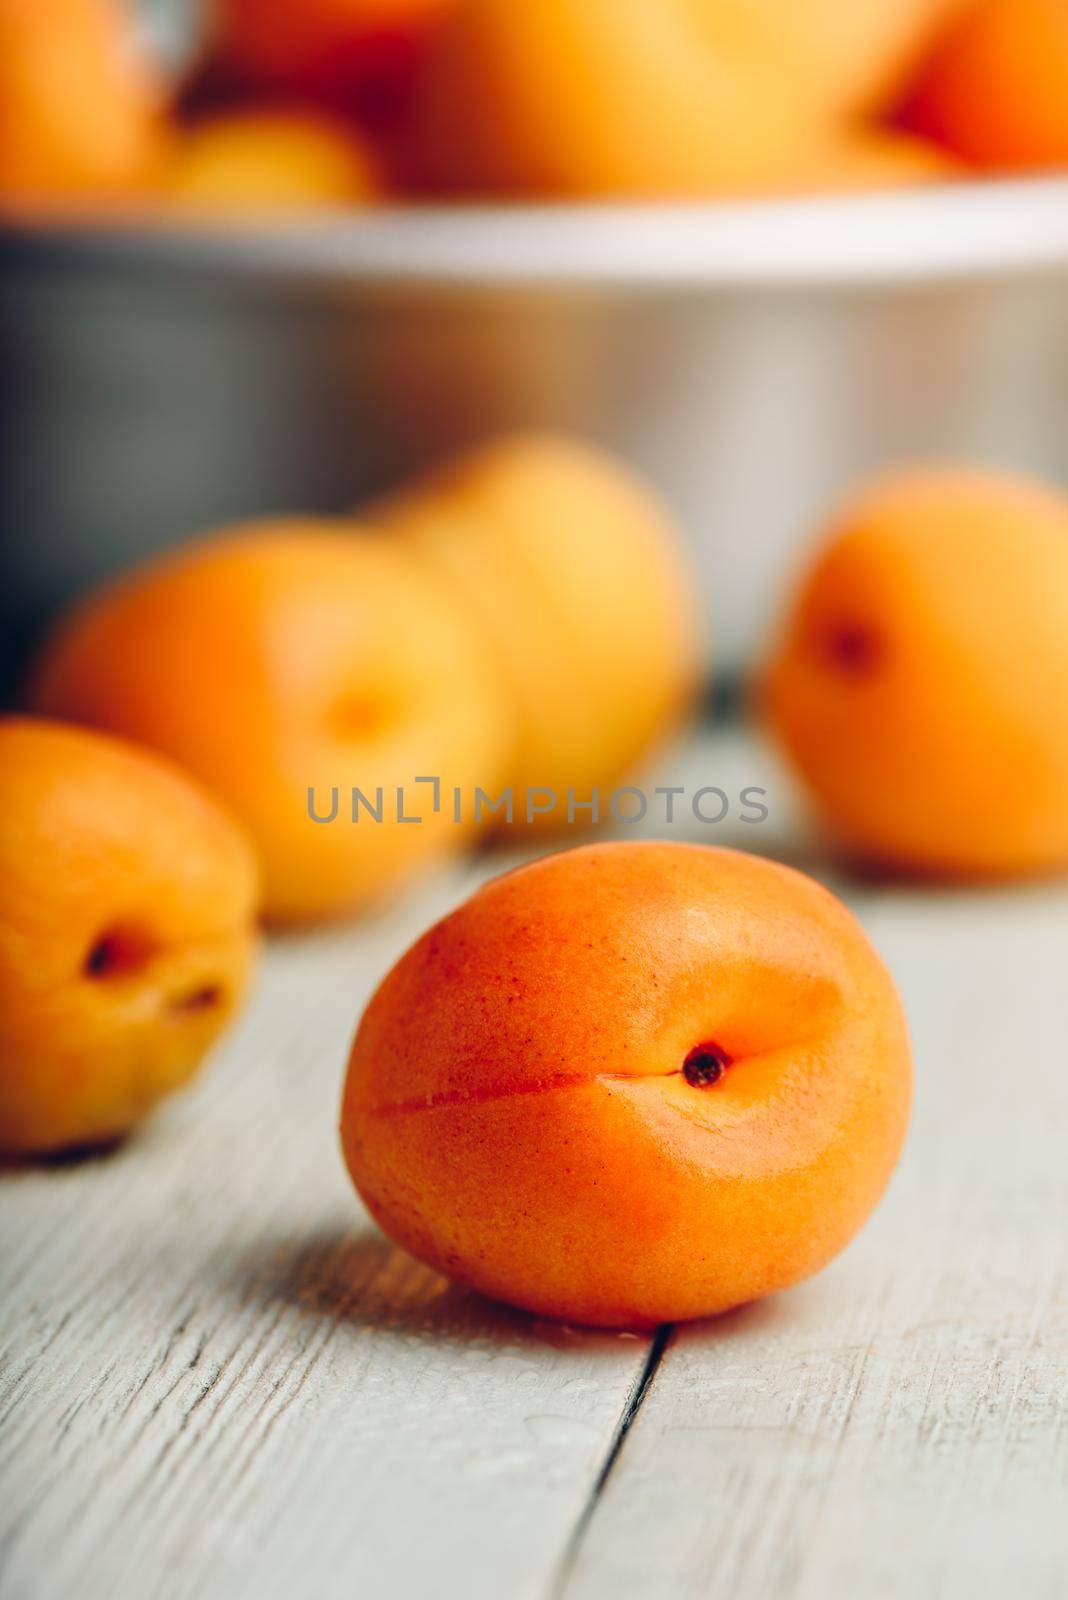 Mellow apricots over light wooden surface by Seva_blsv